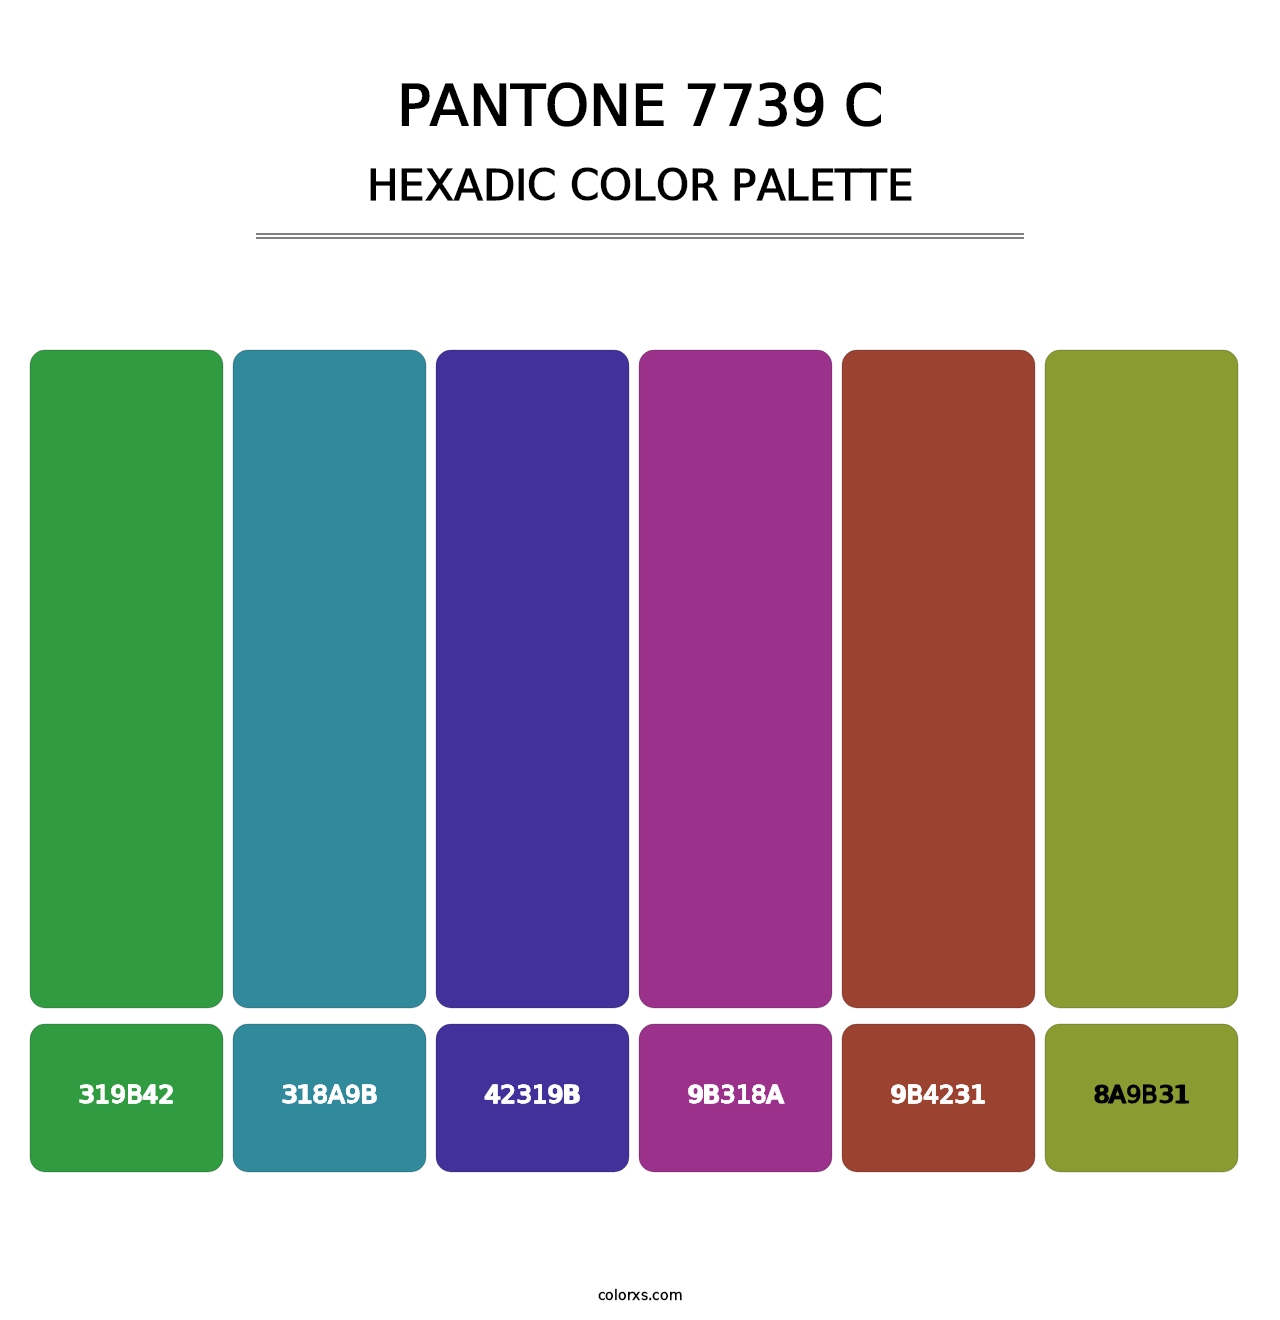 PANTONE 7739 C - Hexadic Color Palette